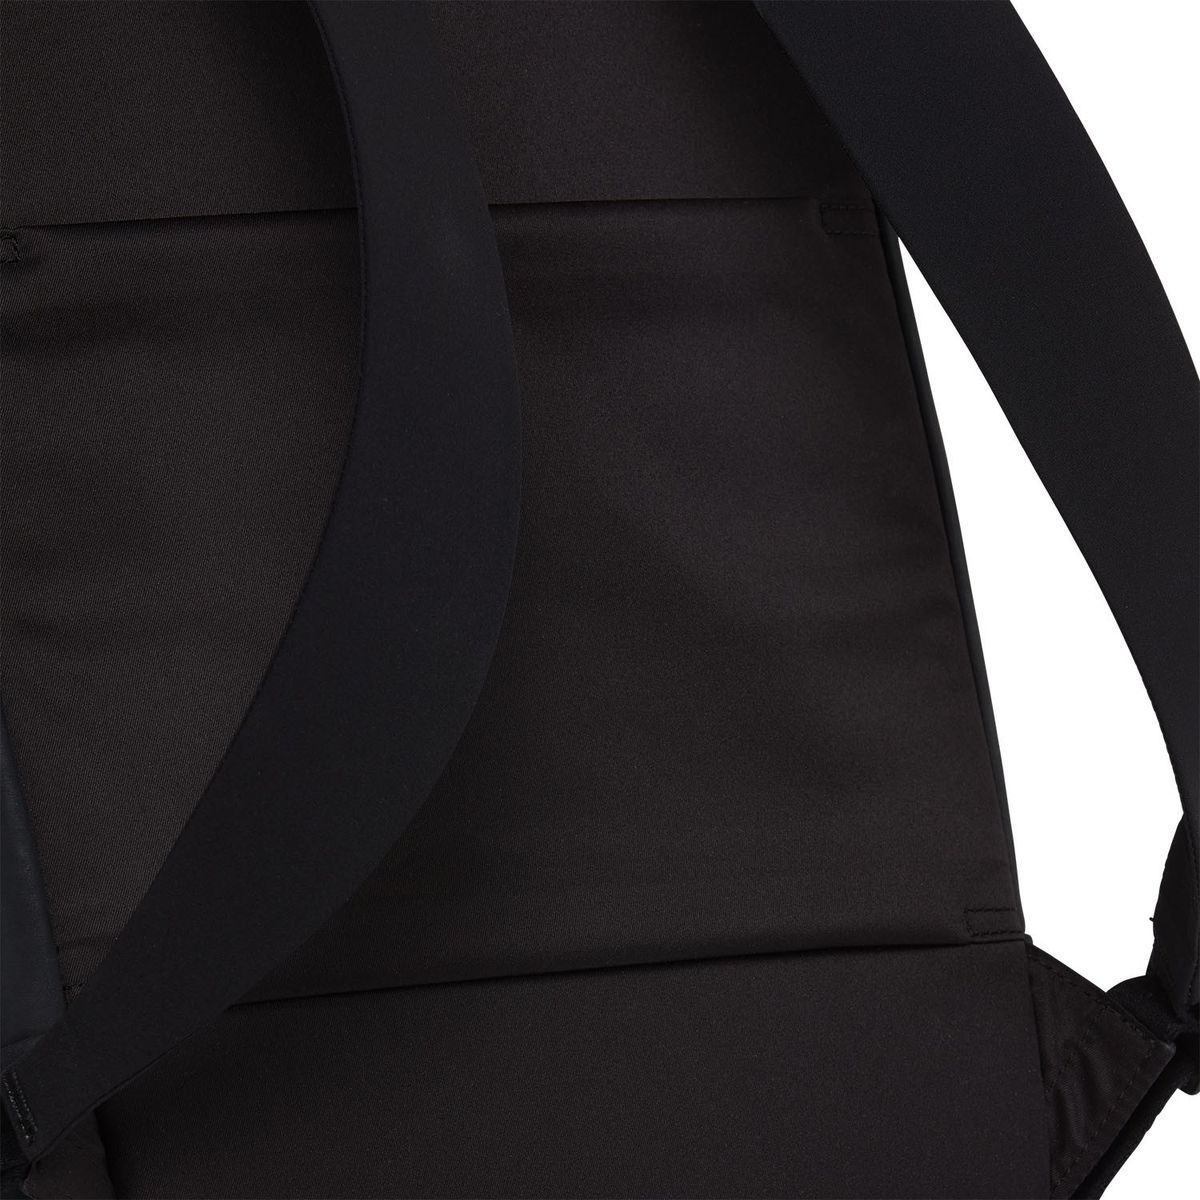 SALZEN Sleek Line Leather Daypack Backpack Charcoal Black